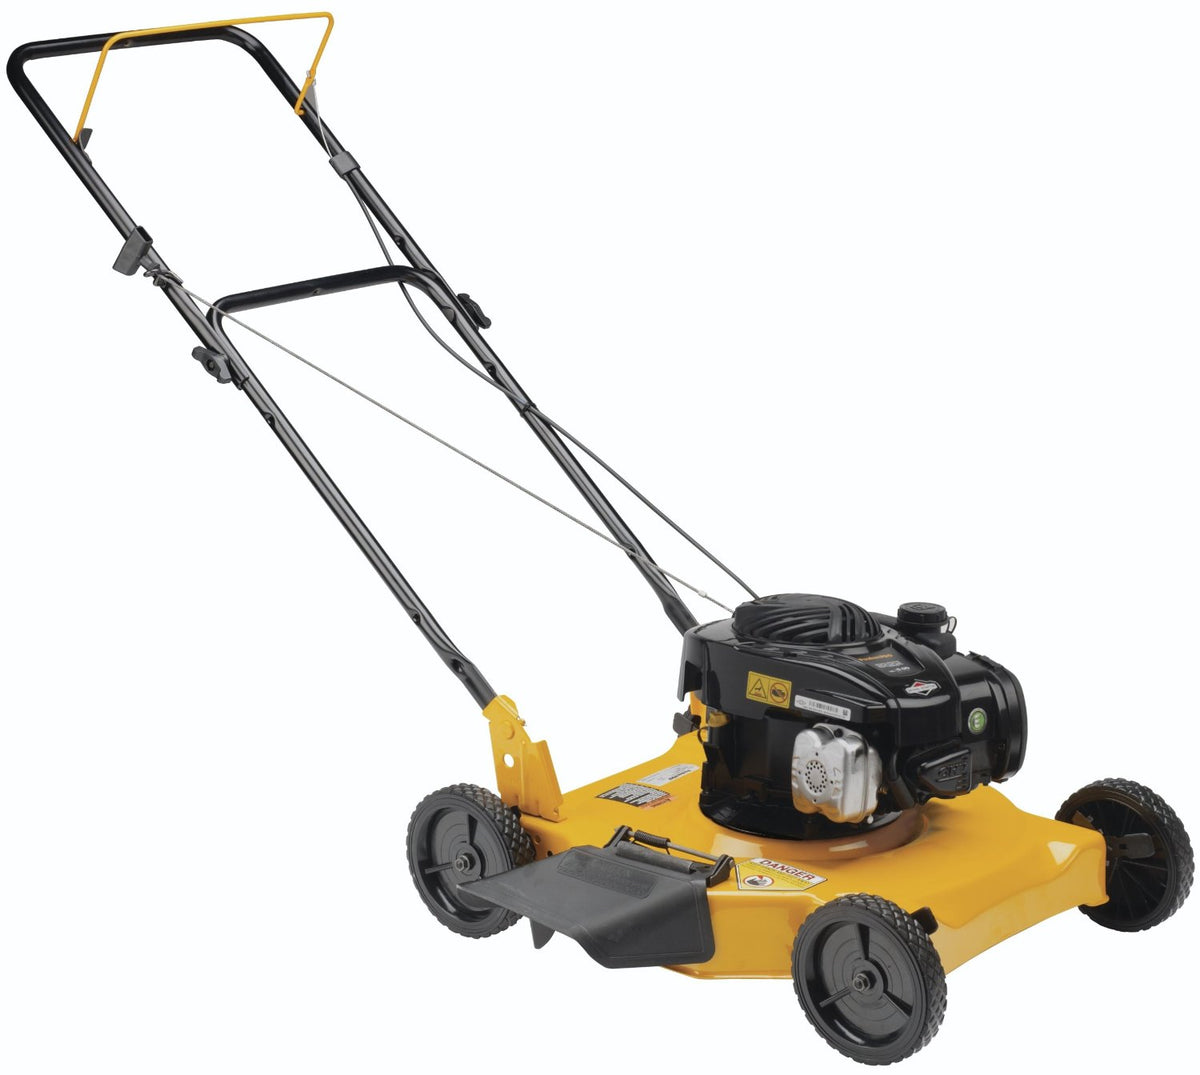 buy push lawn mowers at cheap rate in bulk. wholesale & retail lawn maintenance power tools store.